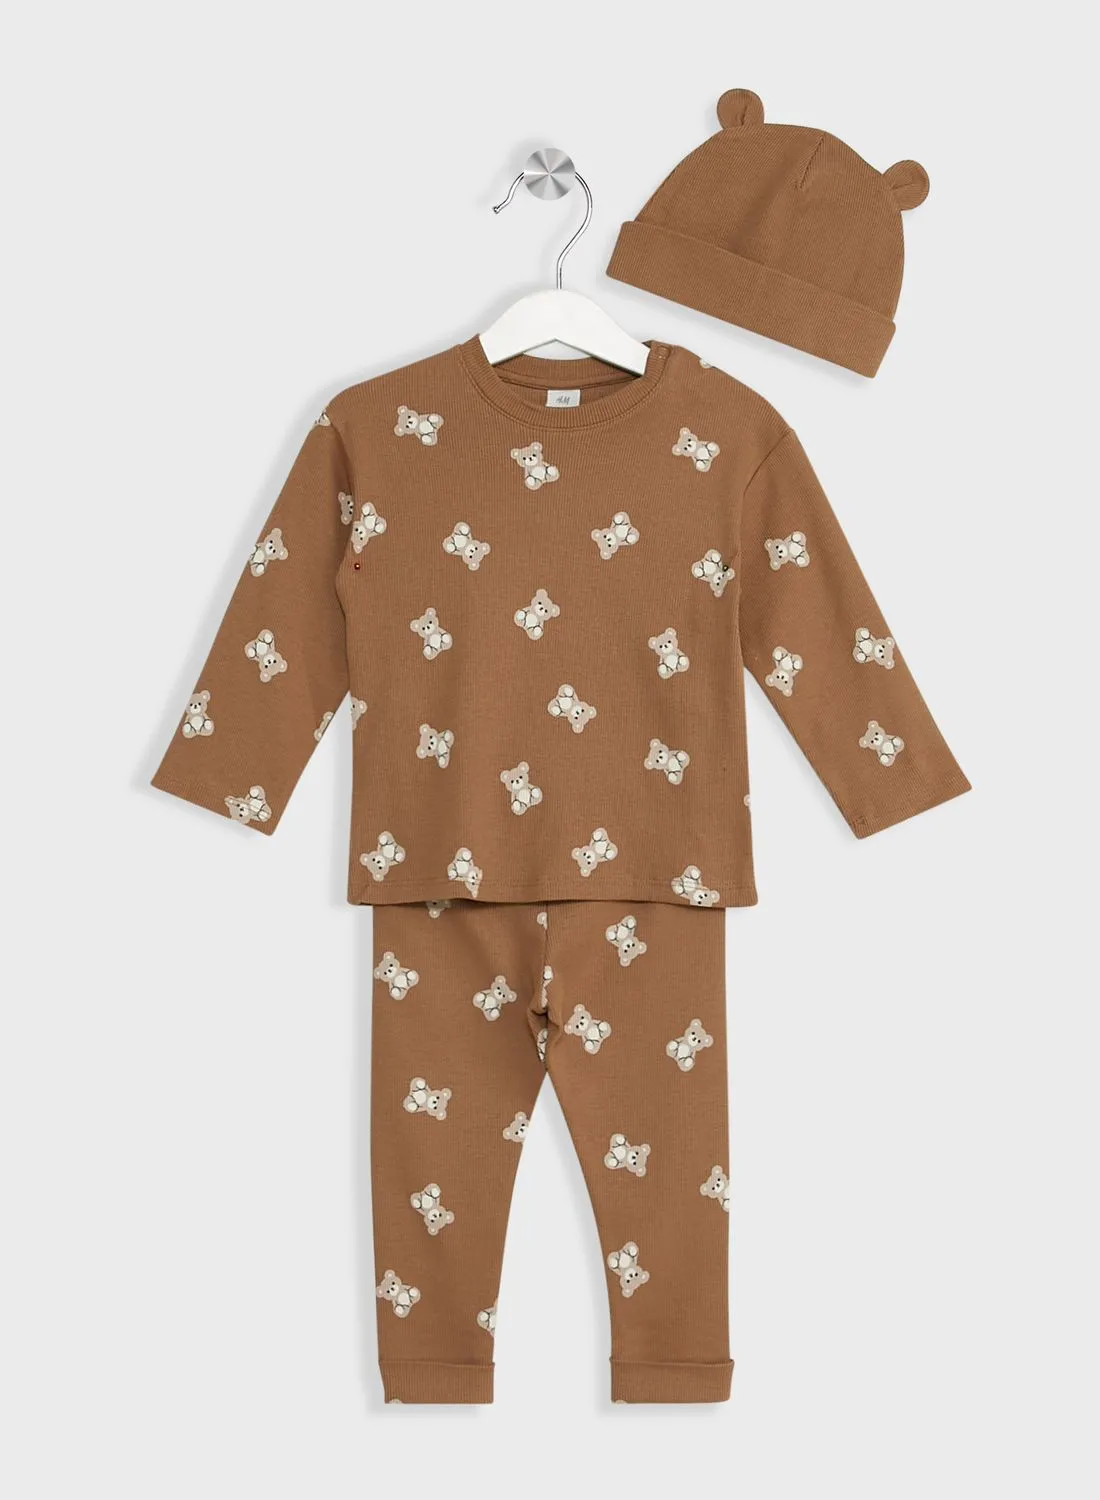 H&M Infant 3 Piece Ribbed Gift Set